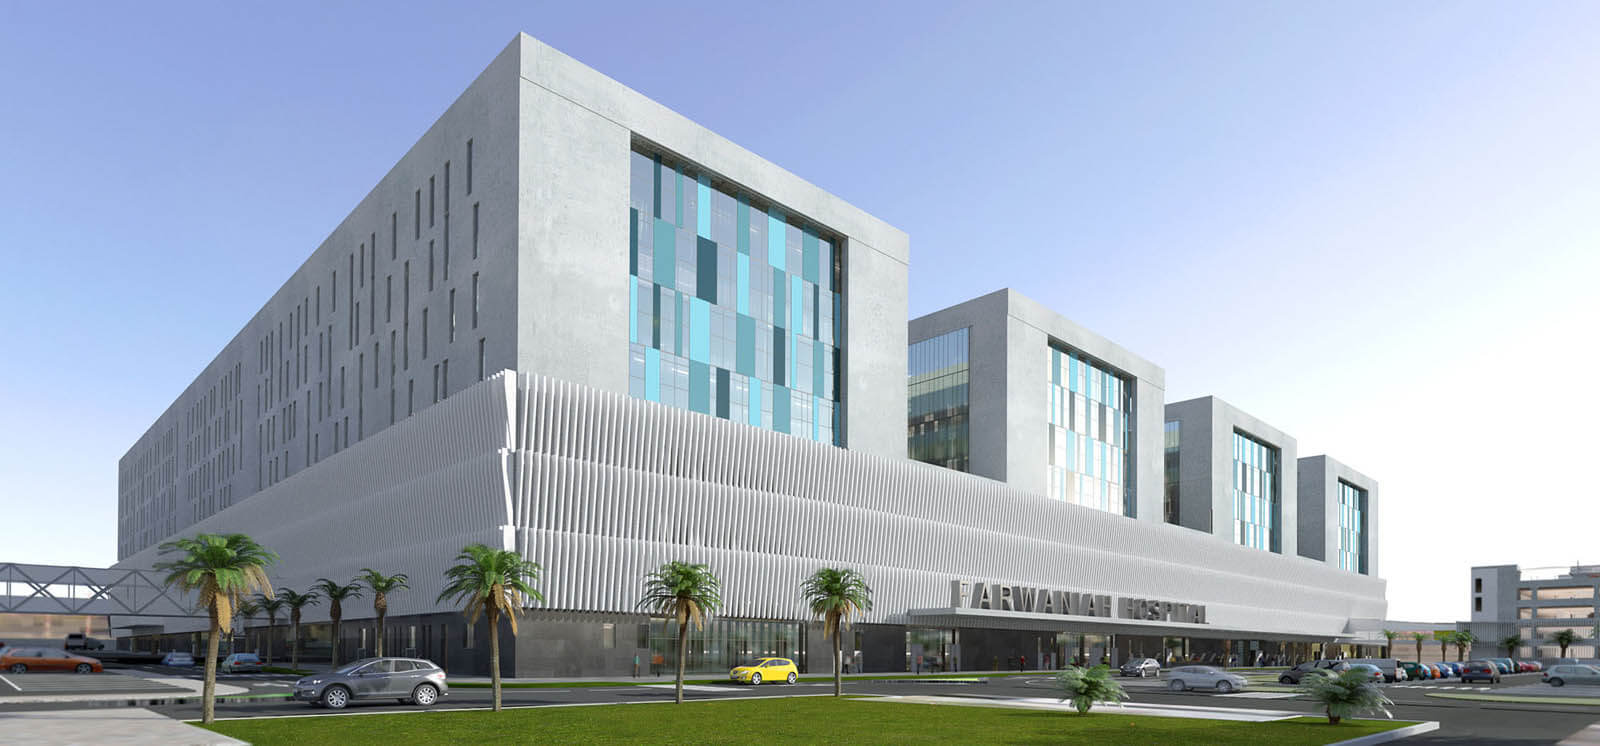 Hospital Farwaniya en BIM - Kuwait (2)